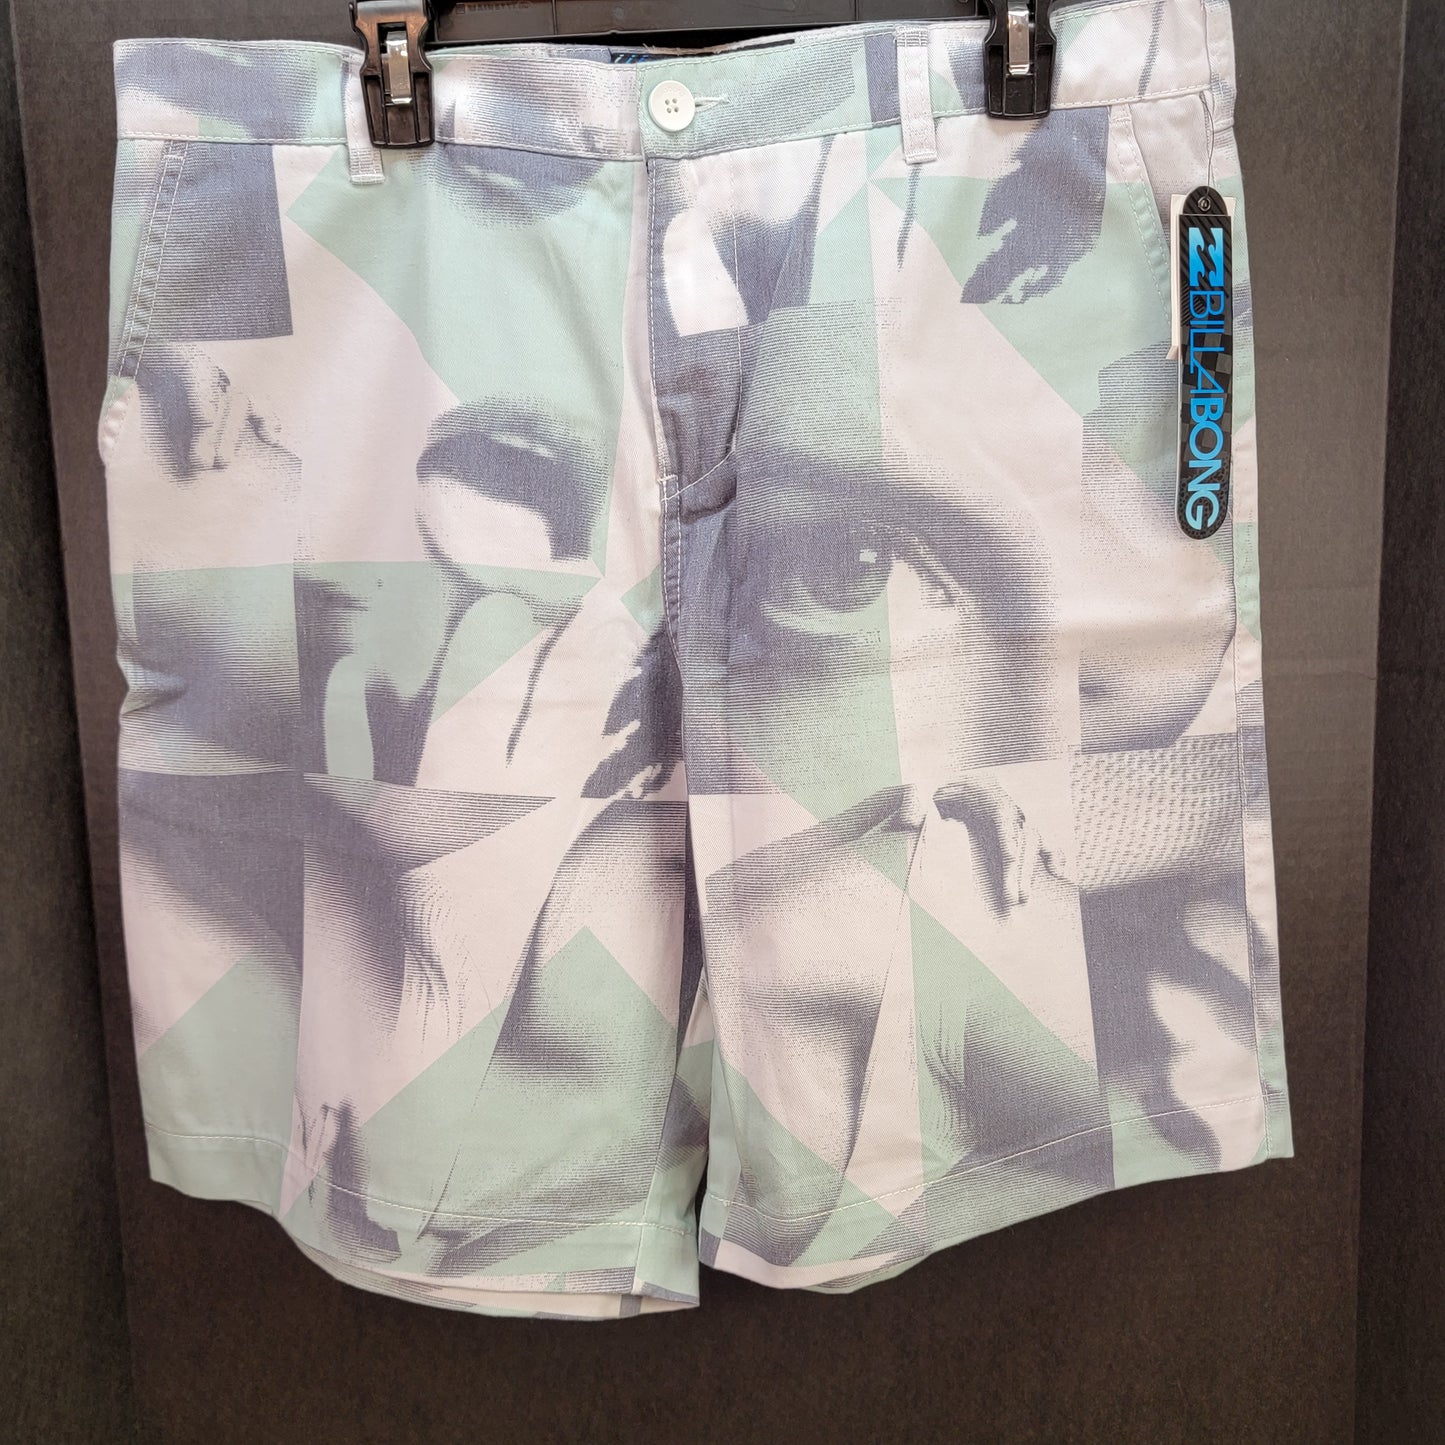 Billabong Men's Board Shorts Cream Green Face Print Size 36 Retail $54